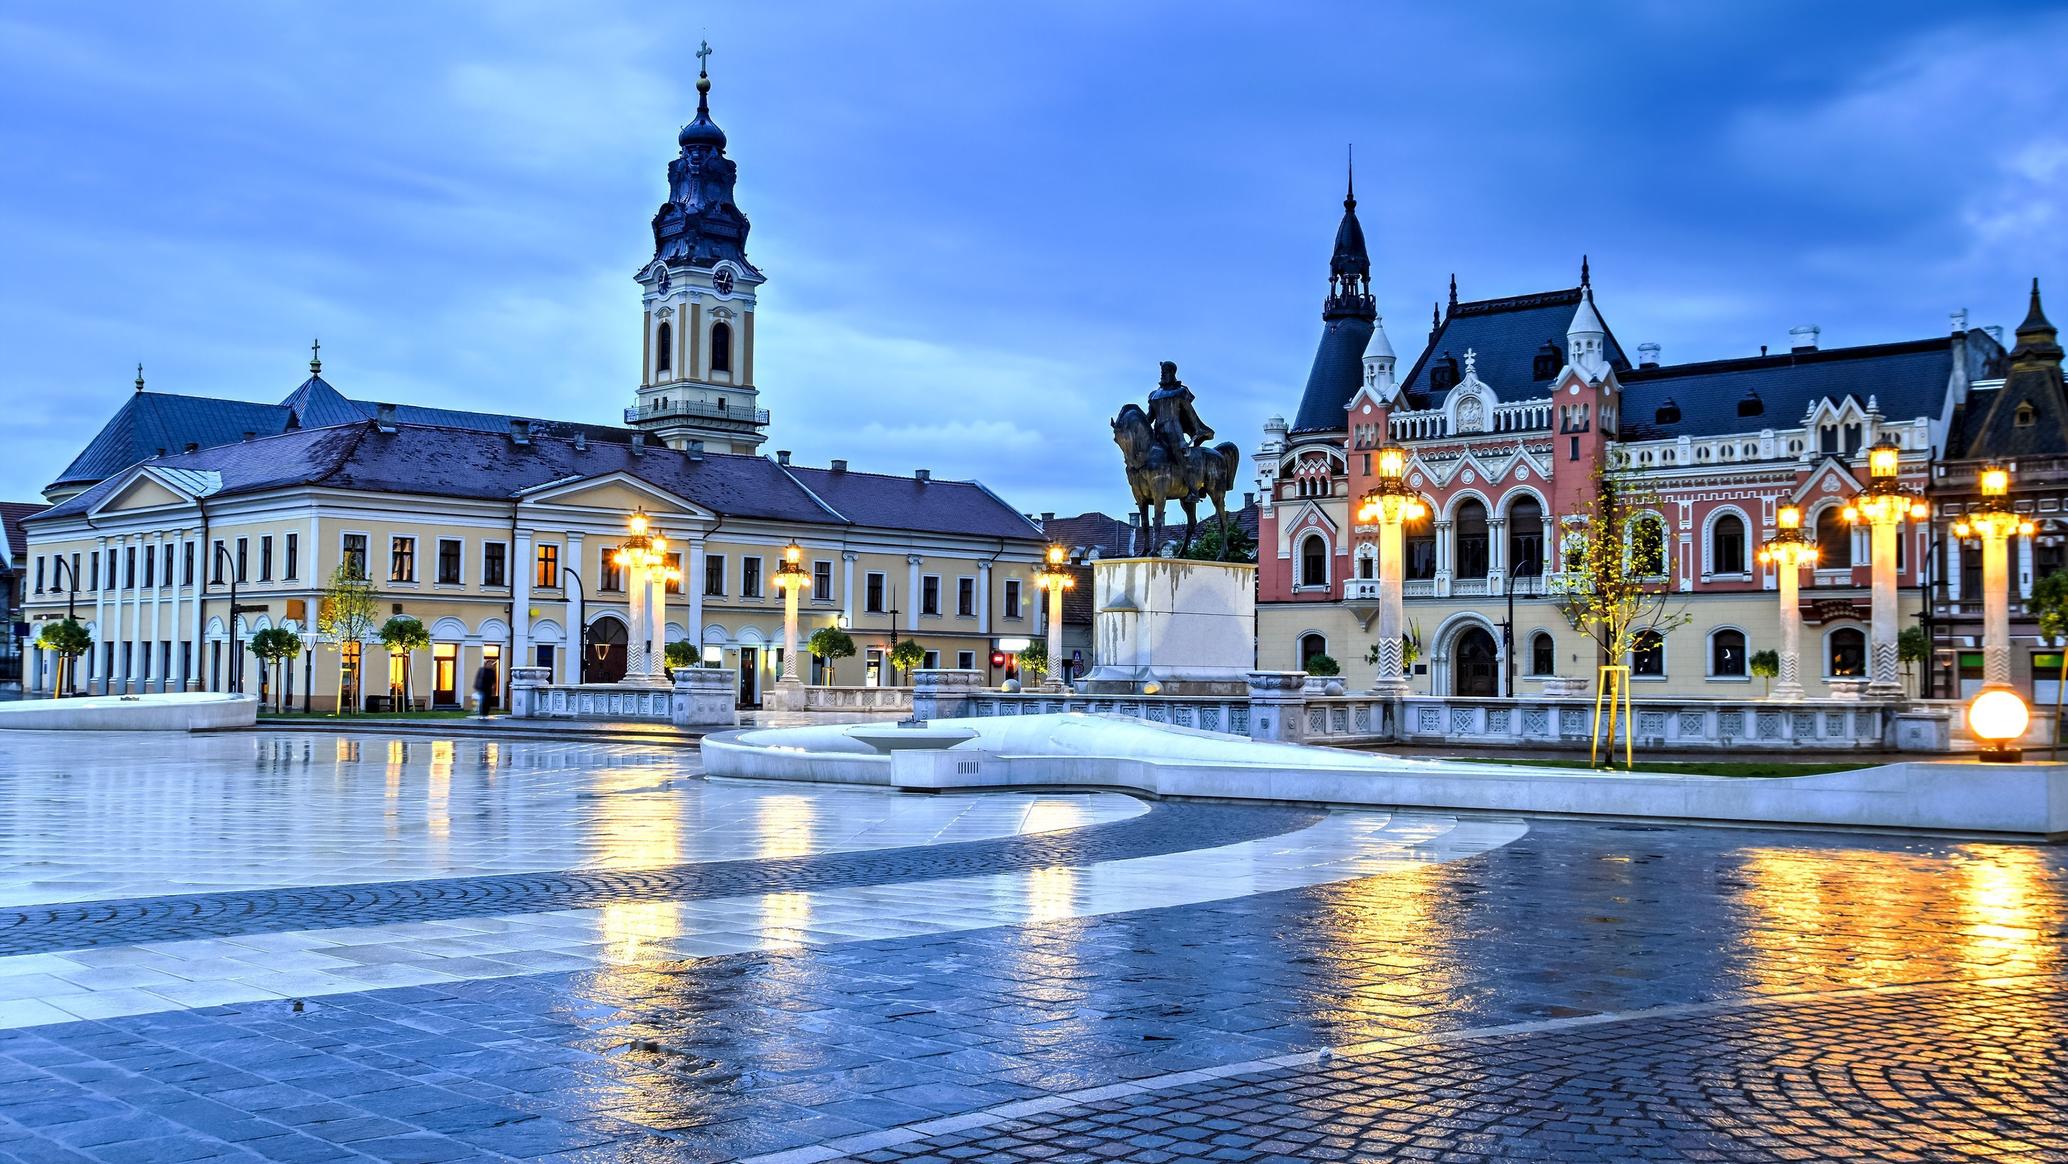 Großwardein (Oradea) Stadt in Rumänien